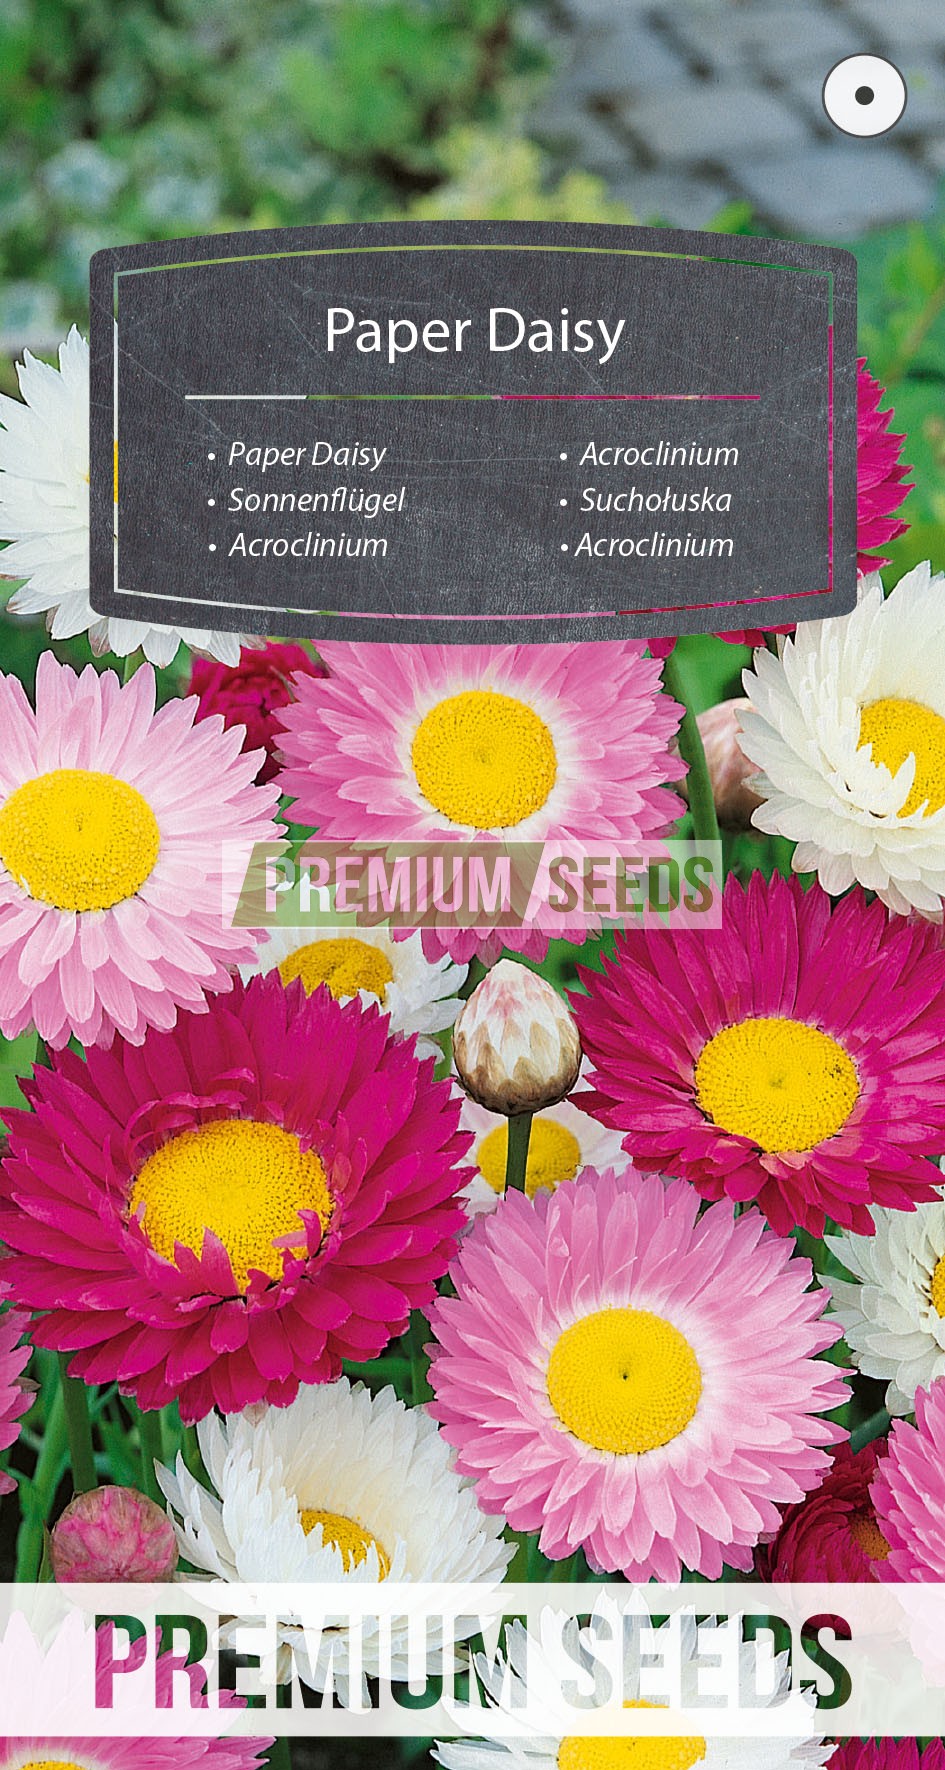 Acroclinium - productor de semillas - PremiumSeeds